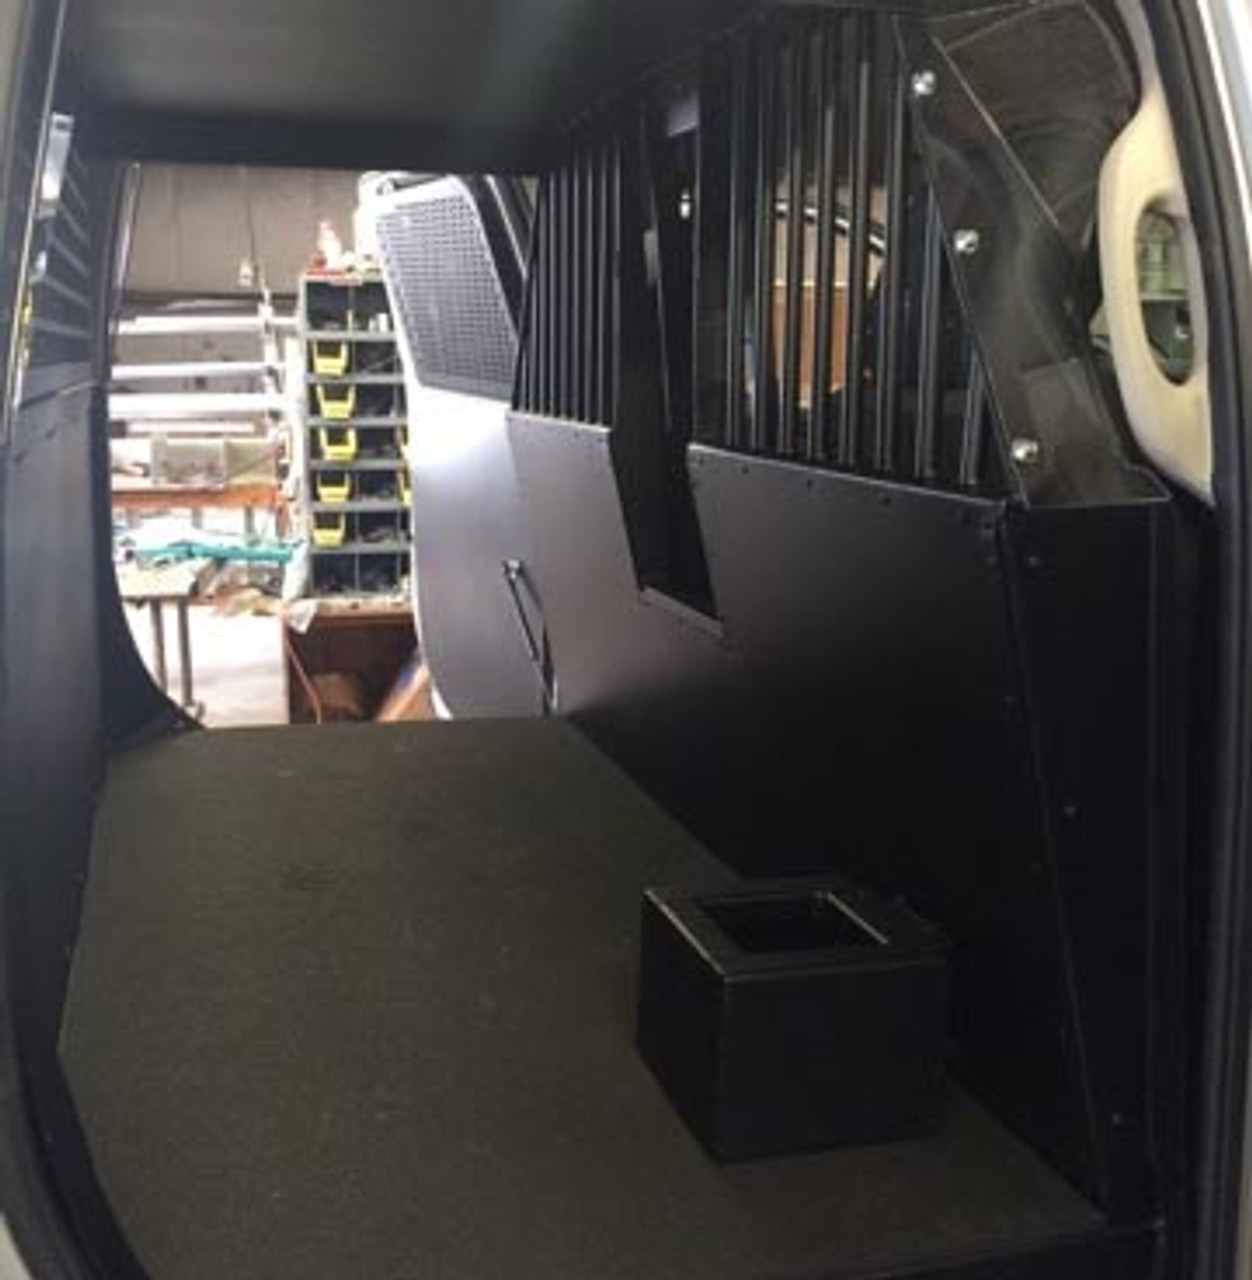 American Aluminum Dodge Ram Crew Cab 2015-2019 EZ Rider Law Enforcement K9 Kennel Transport System, Insert, Black or Aluminum Finish, includes rubber mat, door panels, and window guards